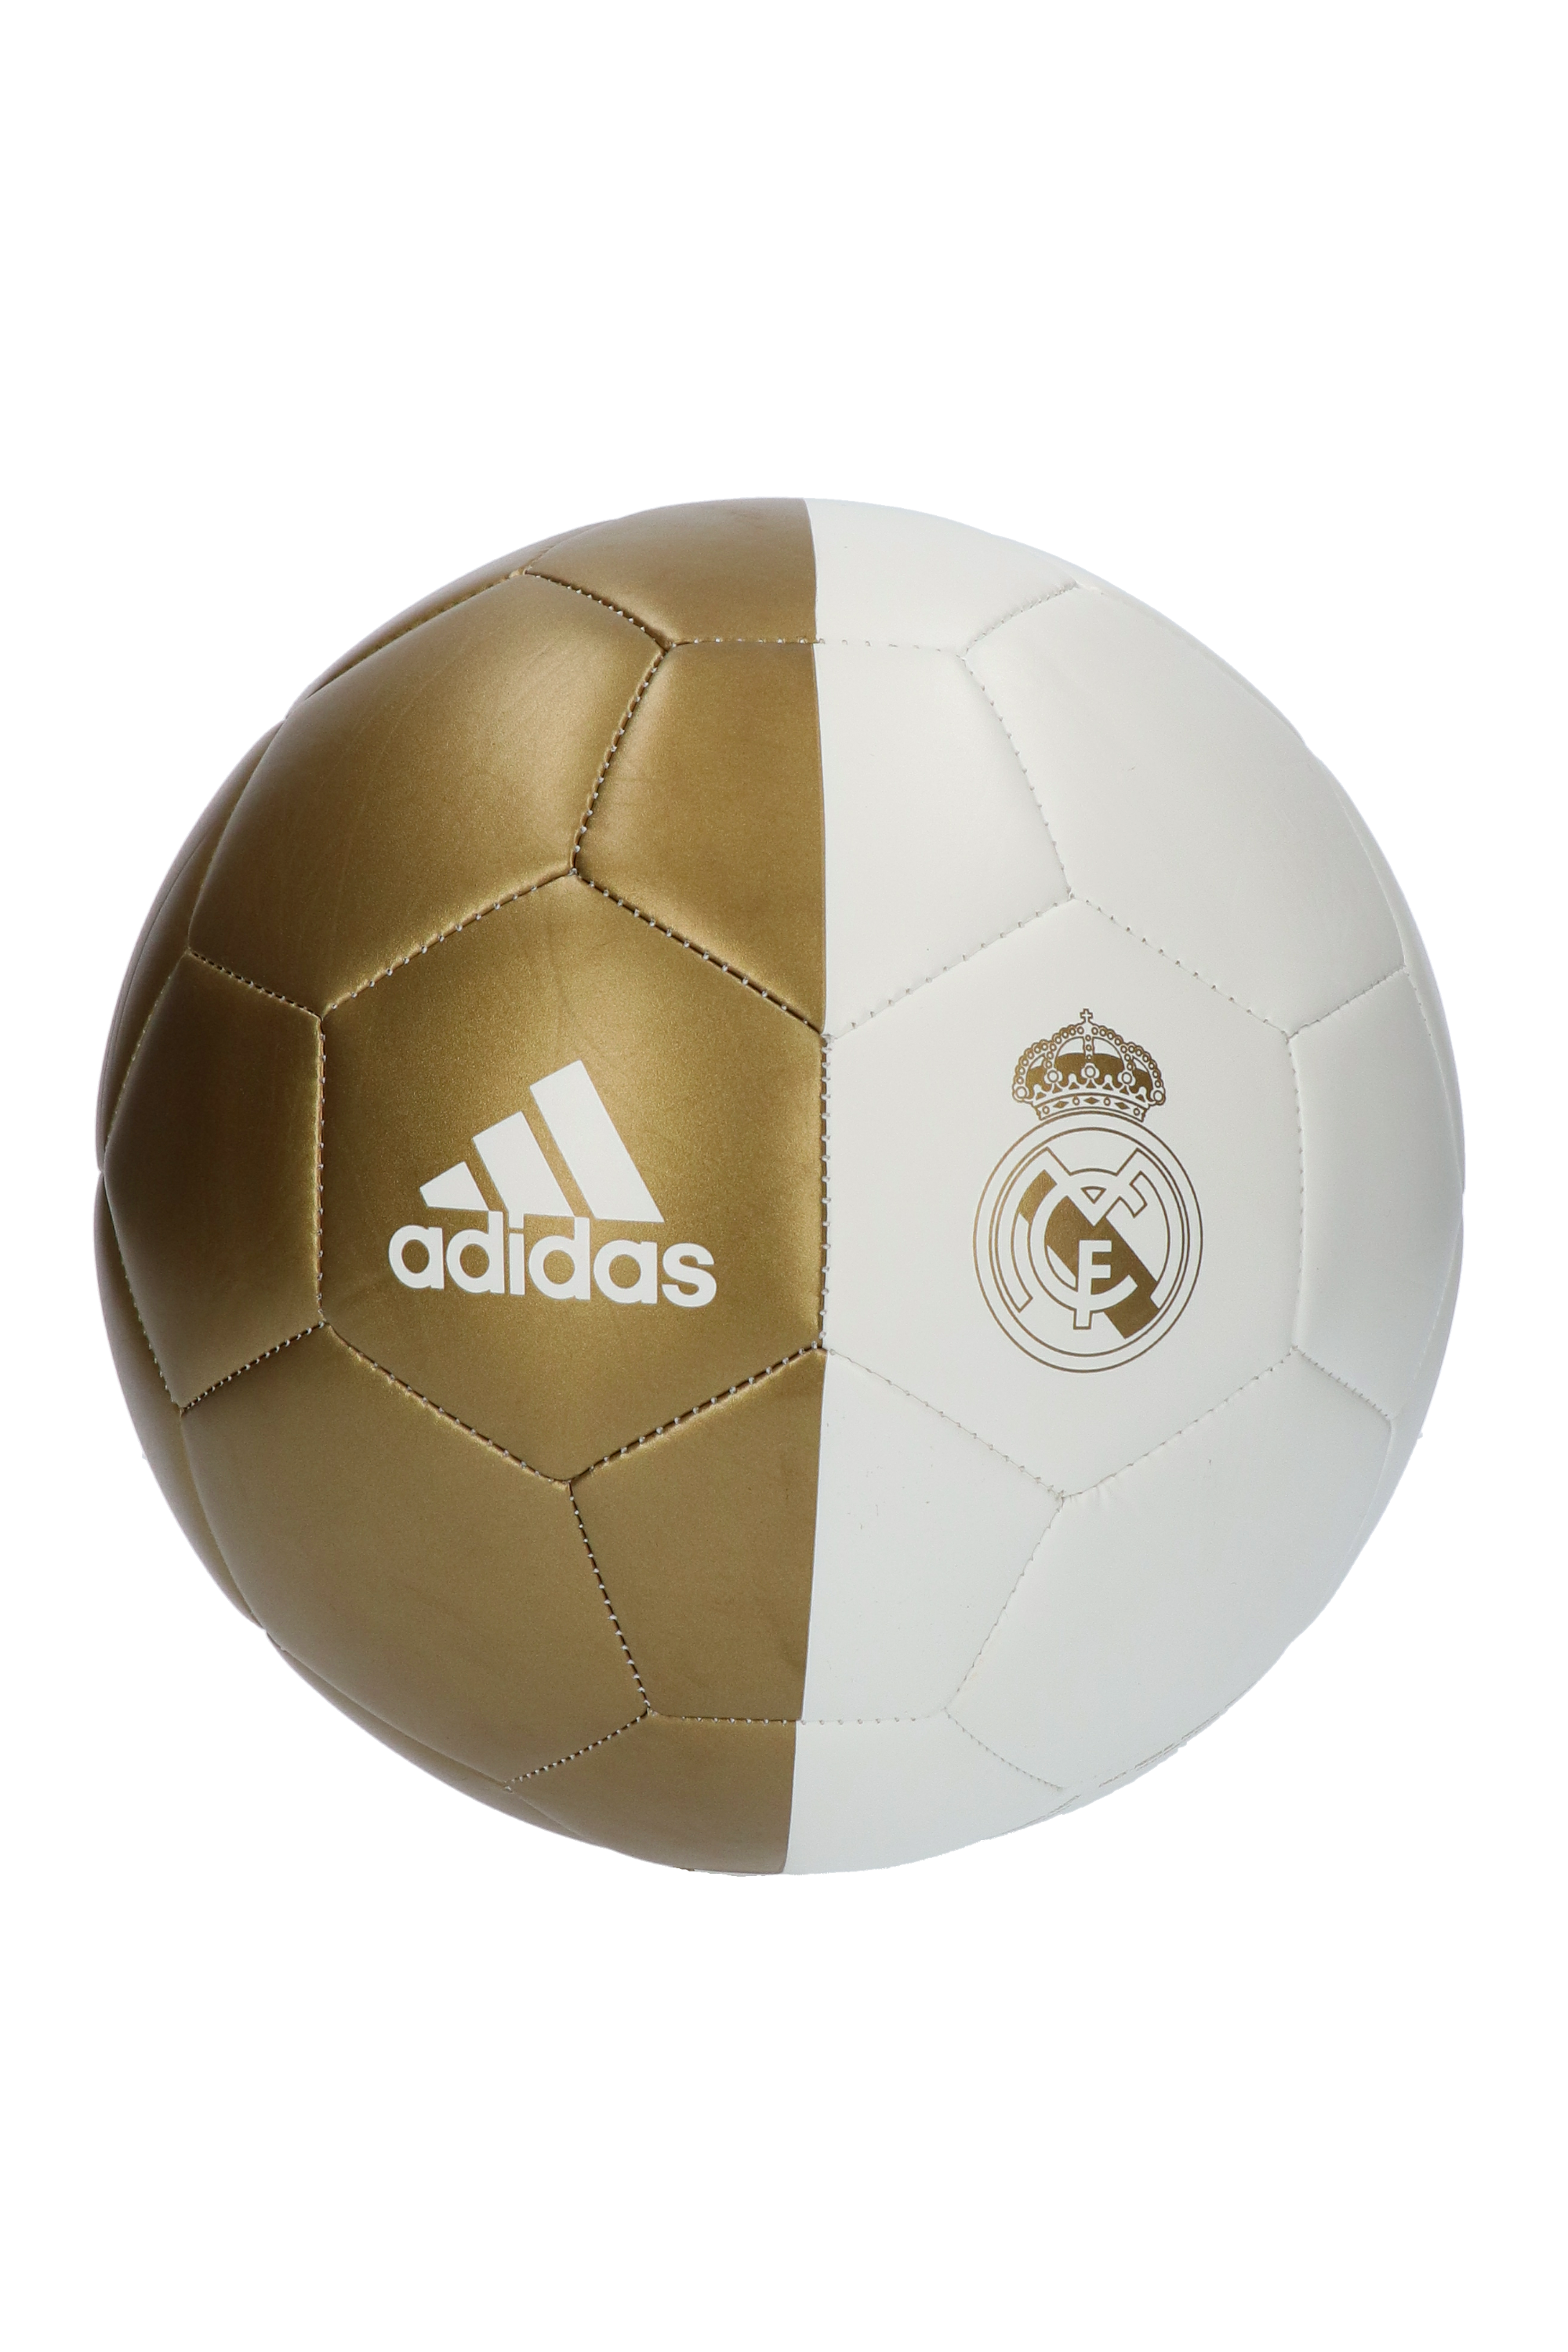 adidas real madrid capitano soccer ball